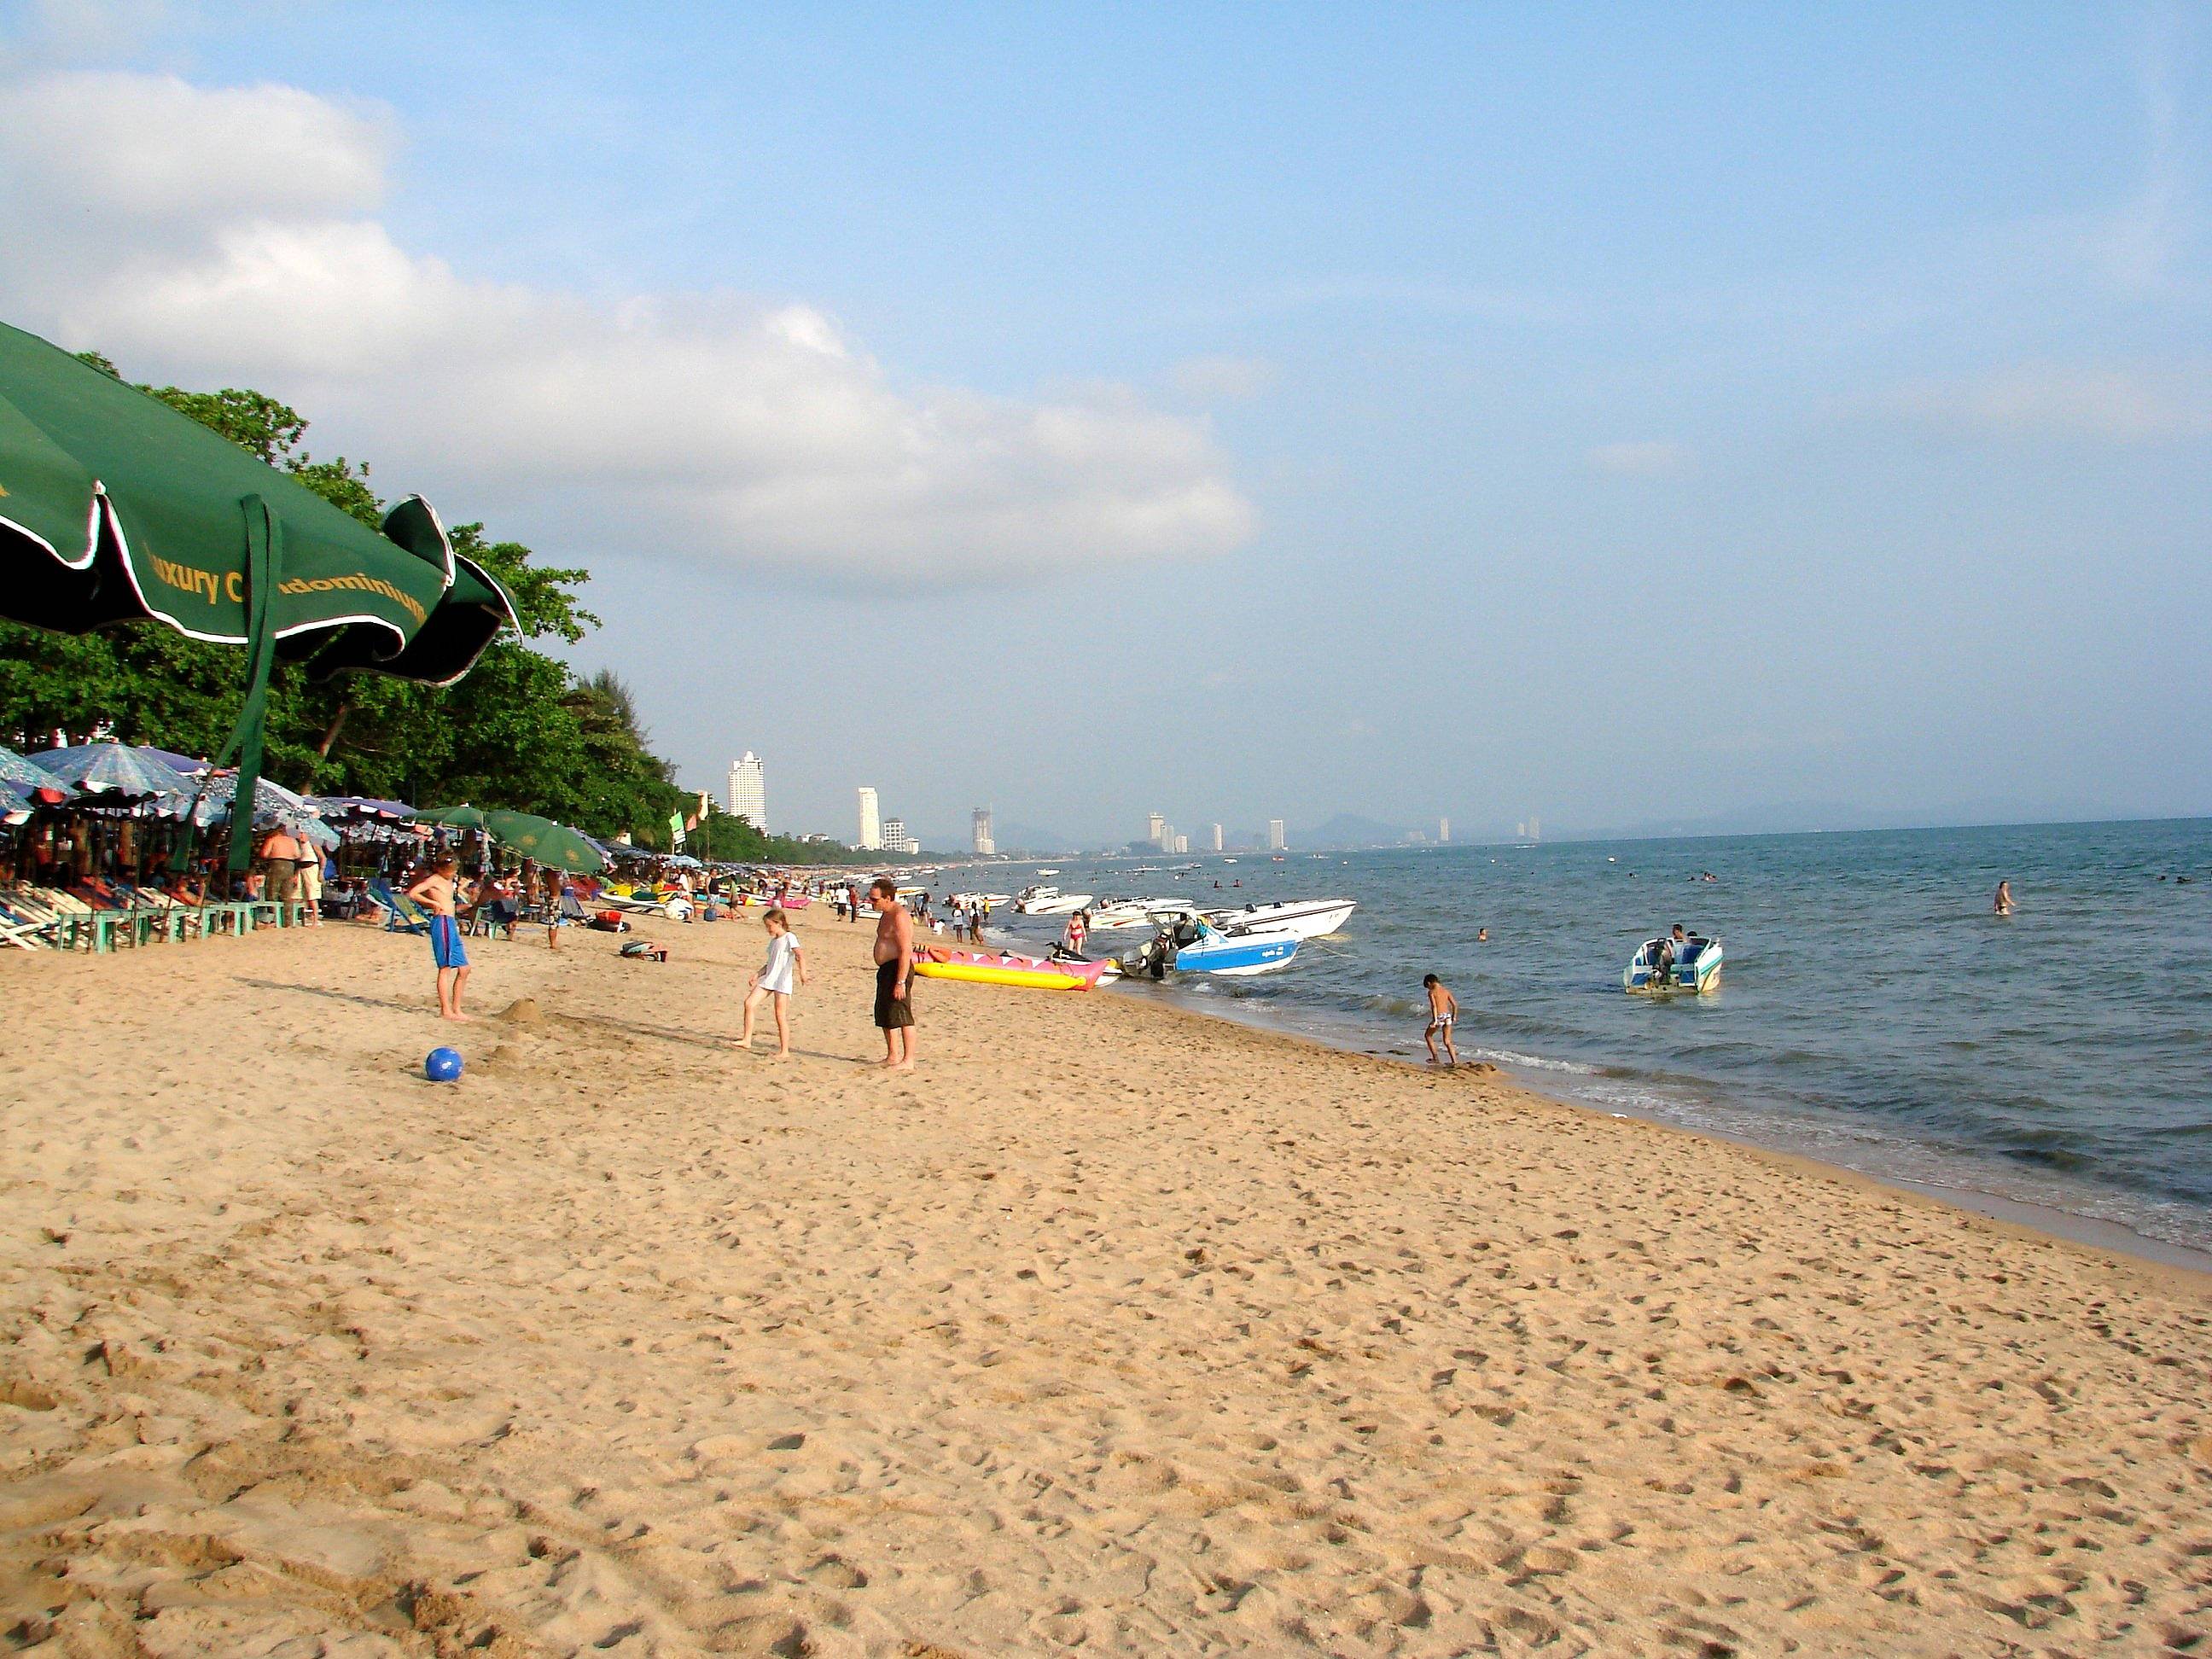 Pattaya